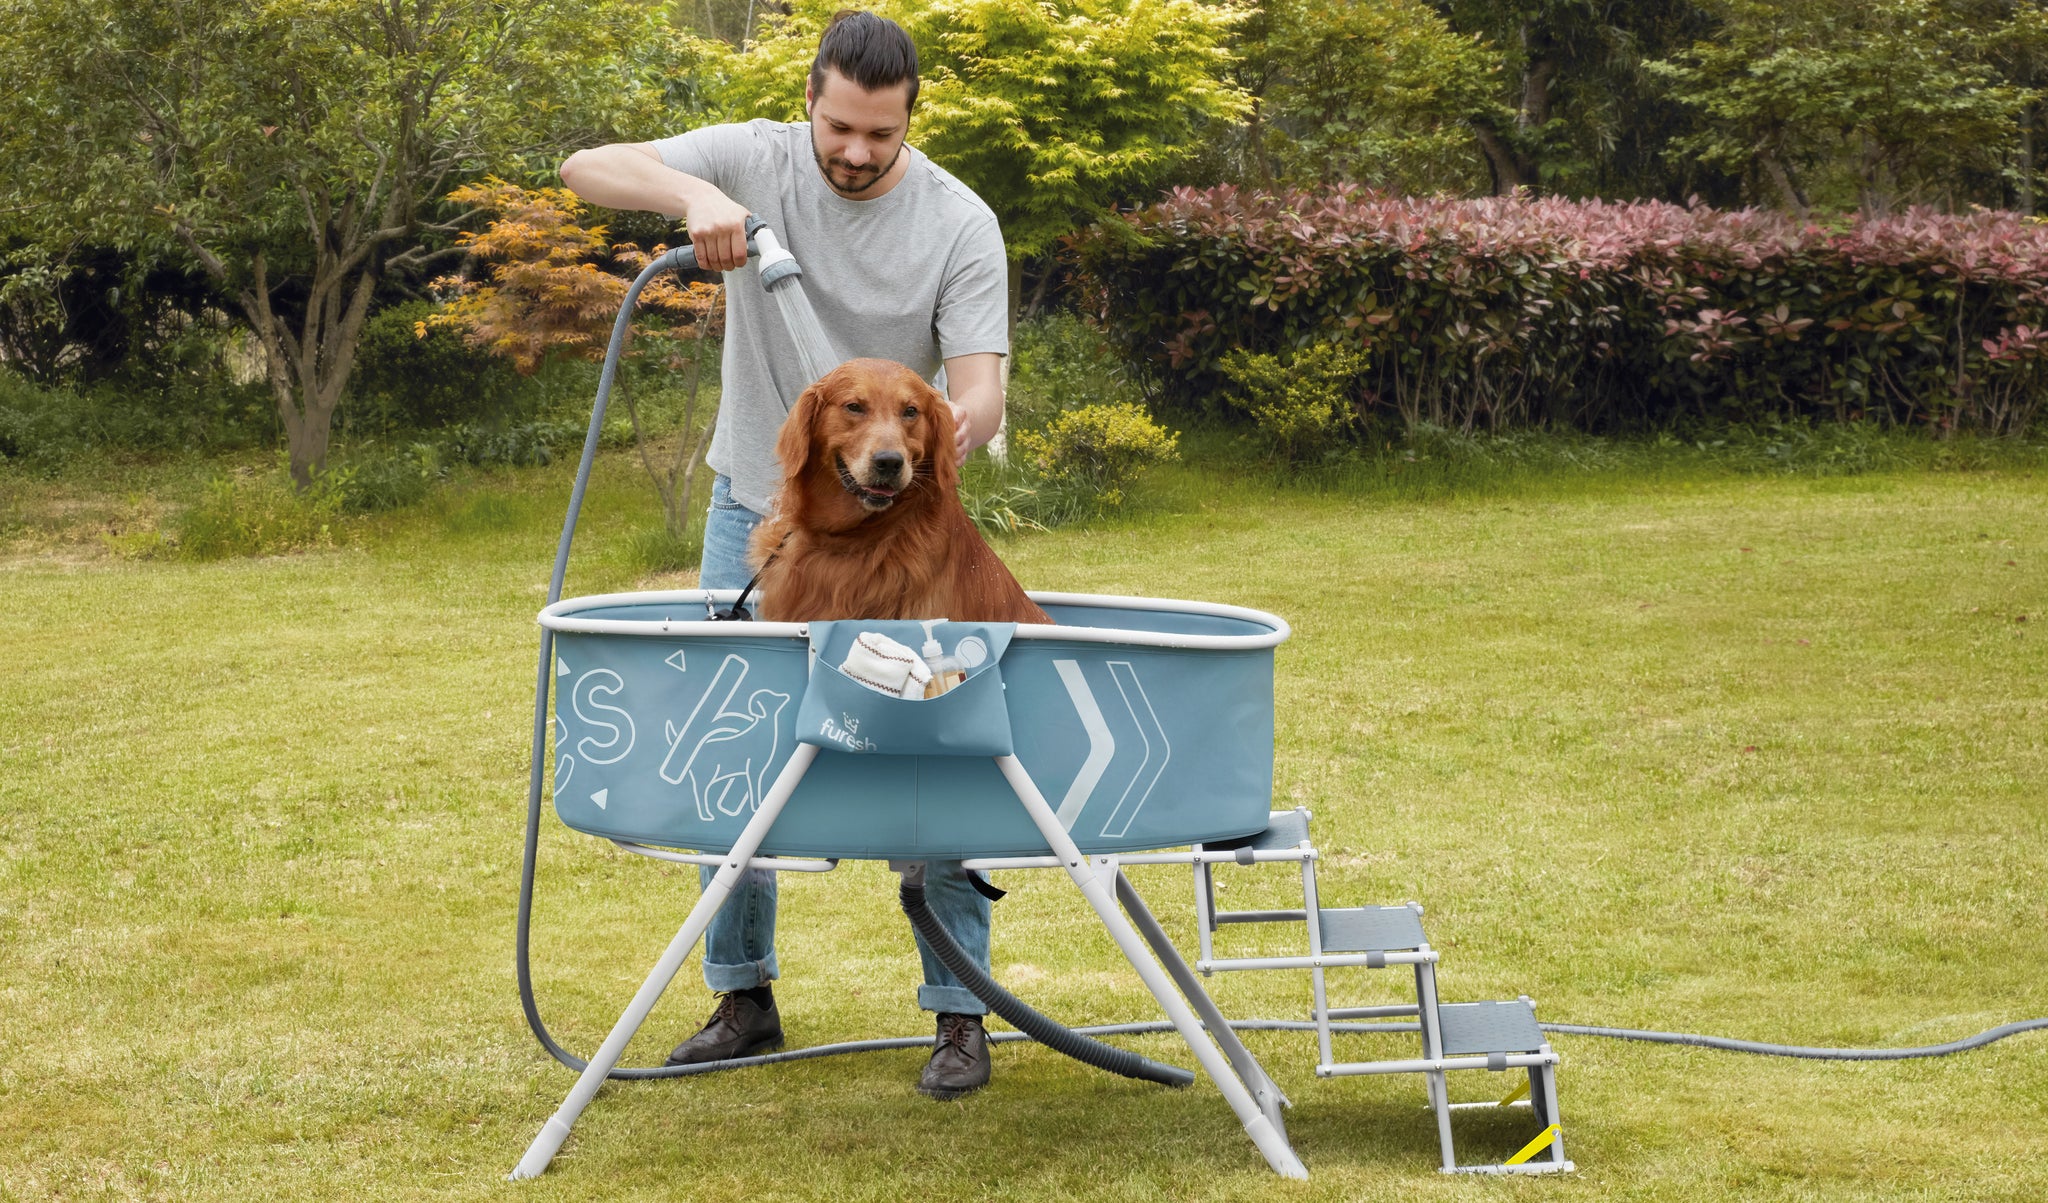 Furesh | Furesh Dog Bath Tub – Affordable Dog Spa at home with